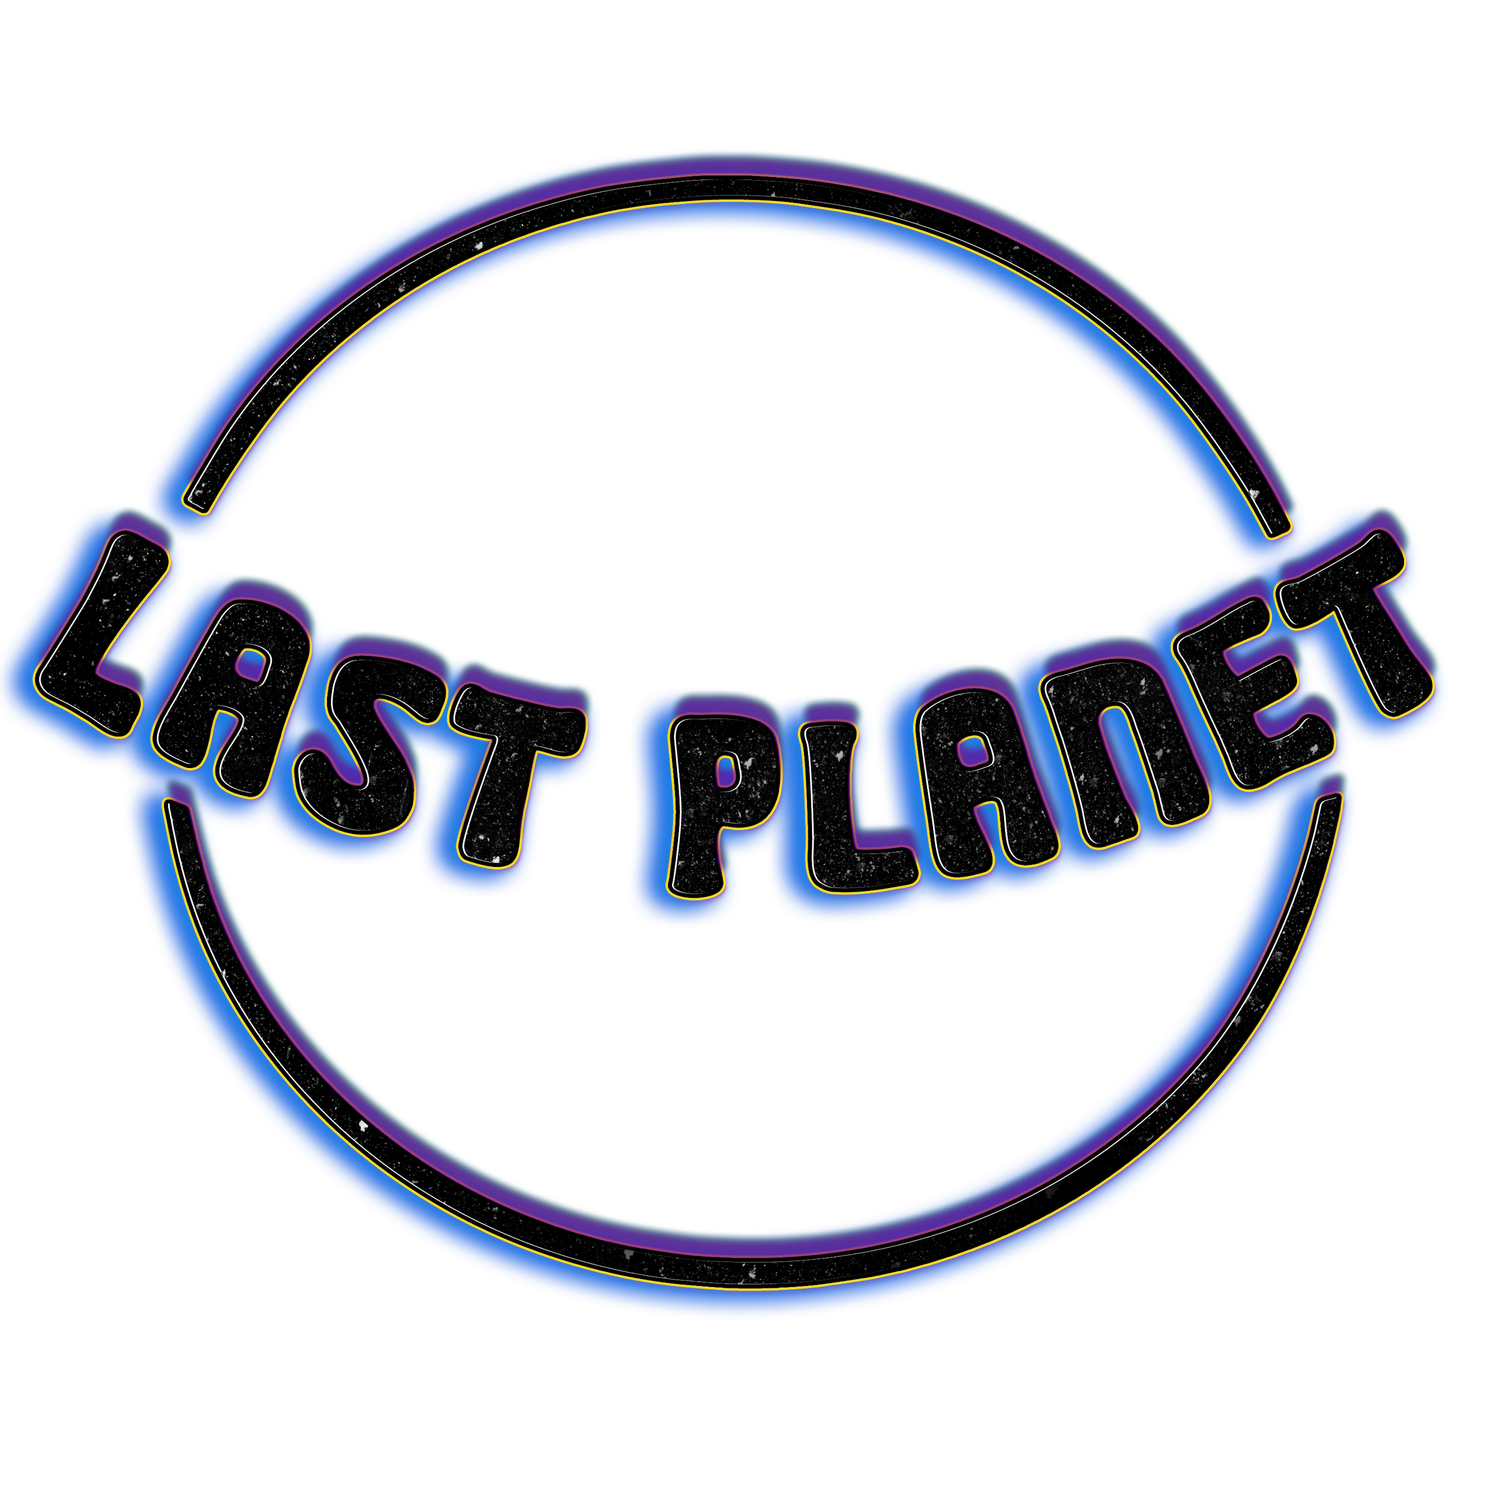 Last Planet